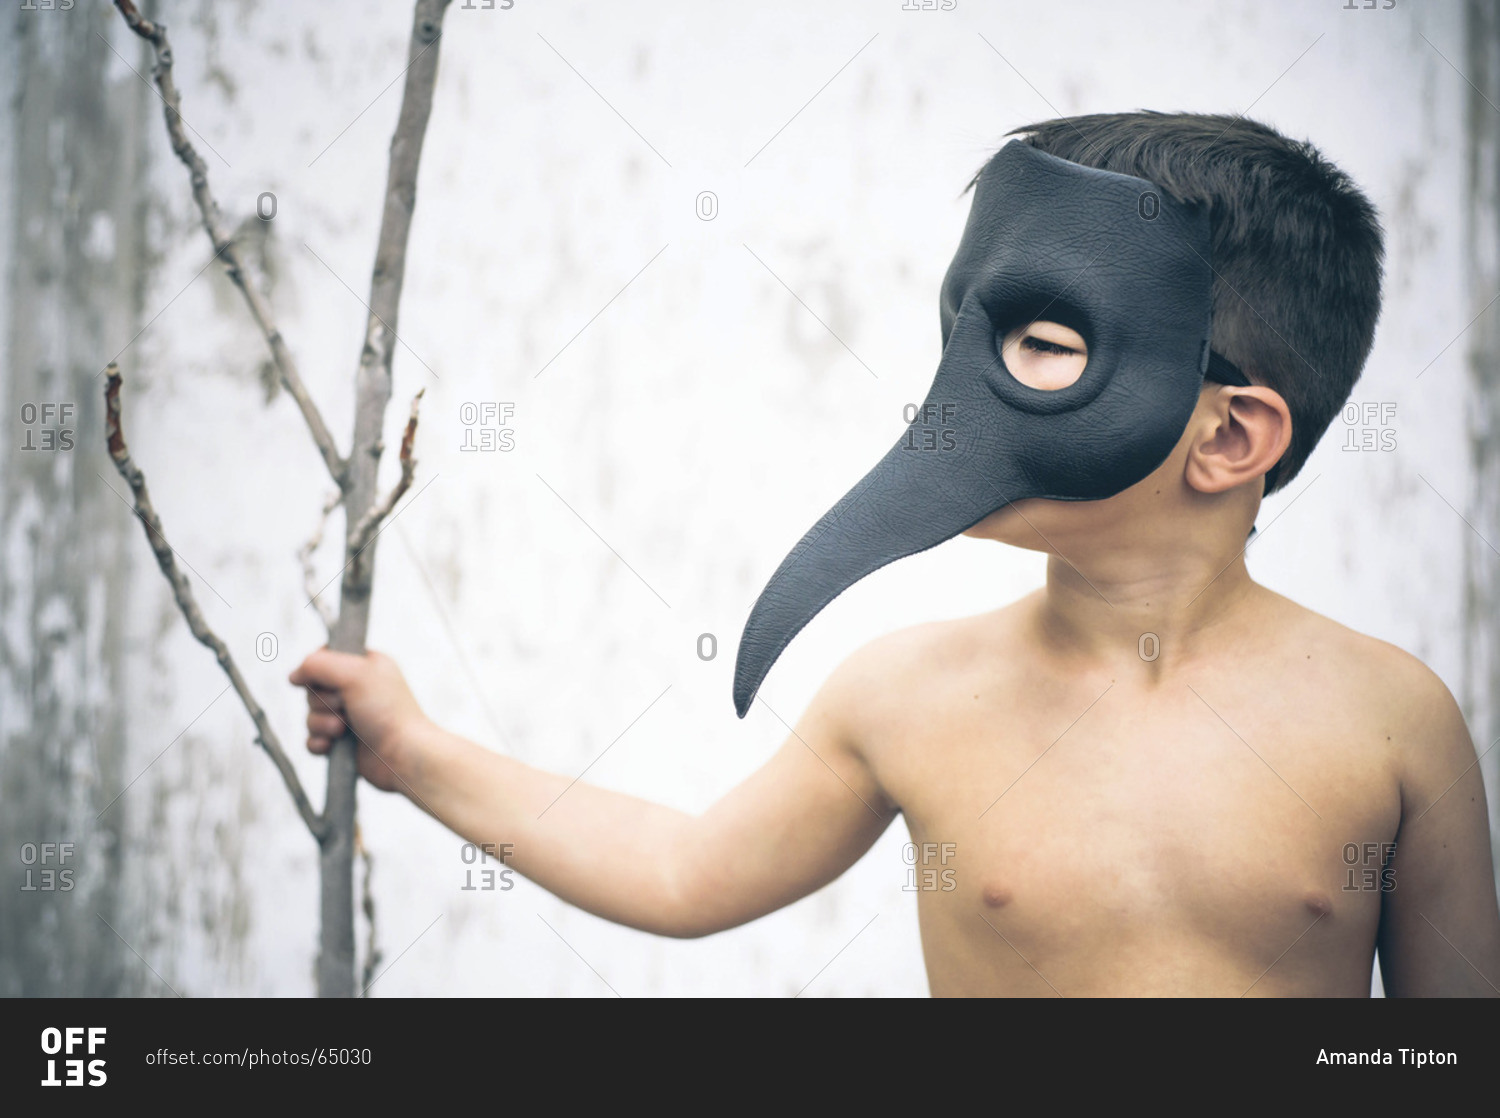 Boy wearing bird-like beak mask